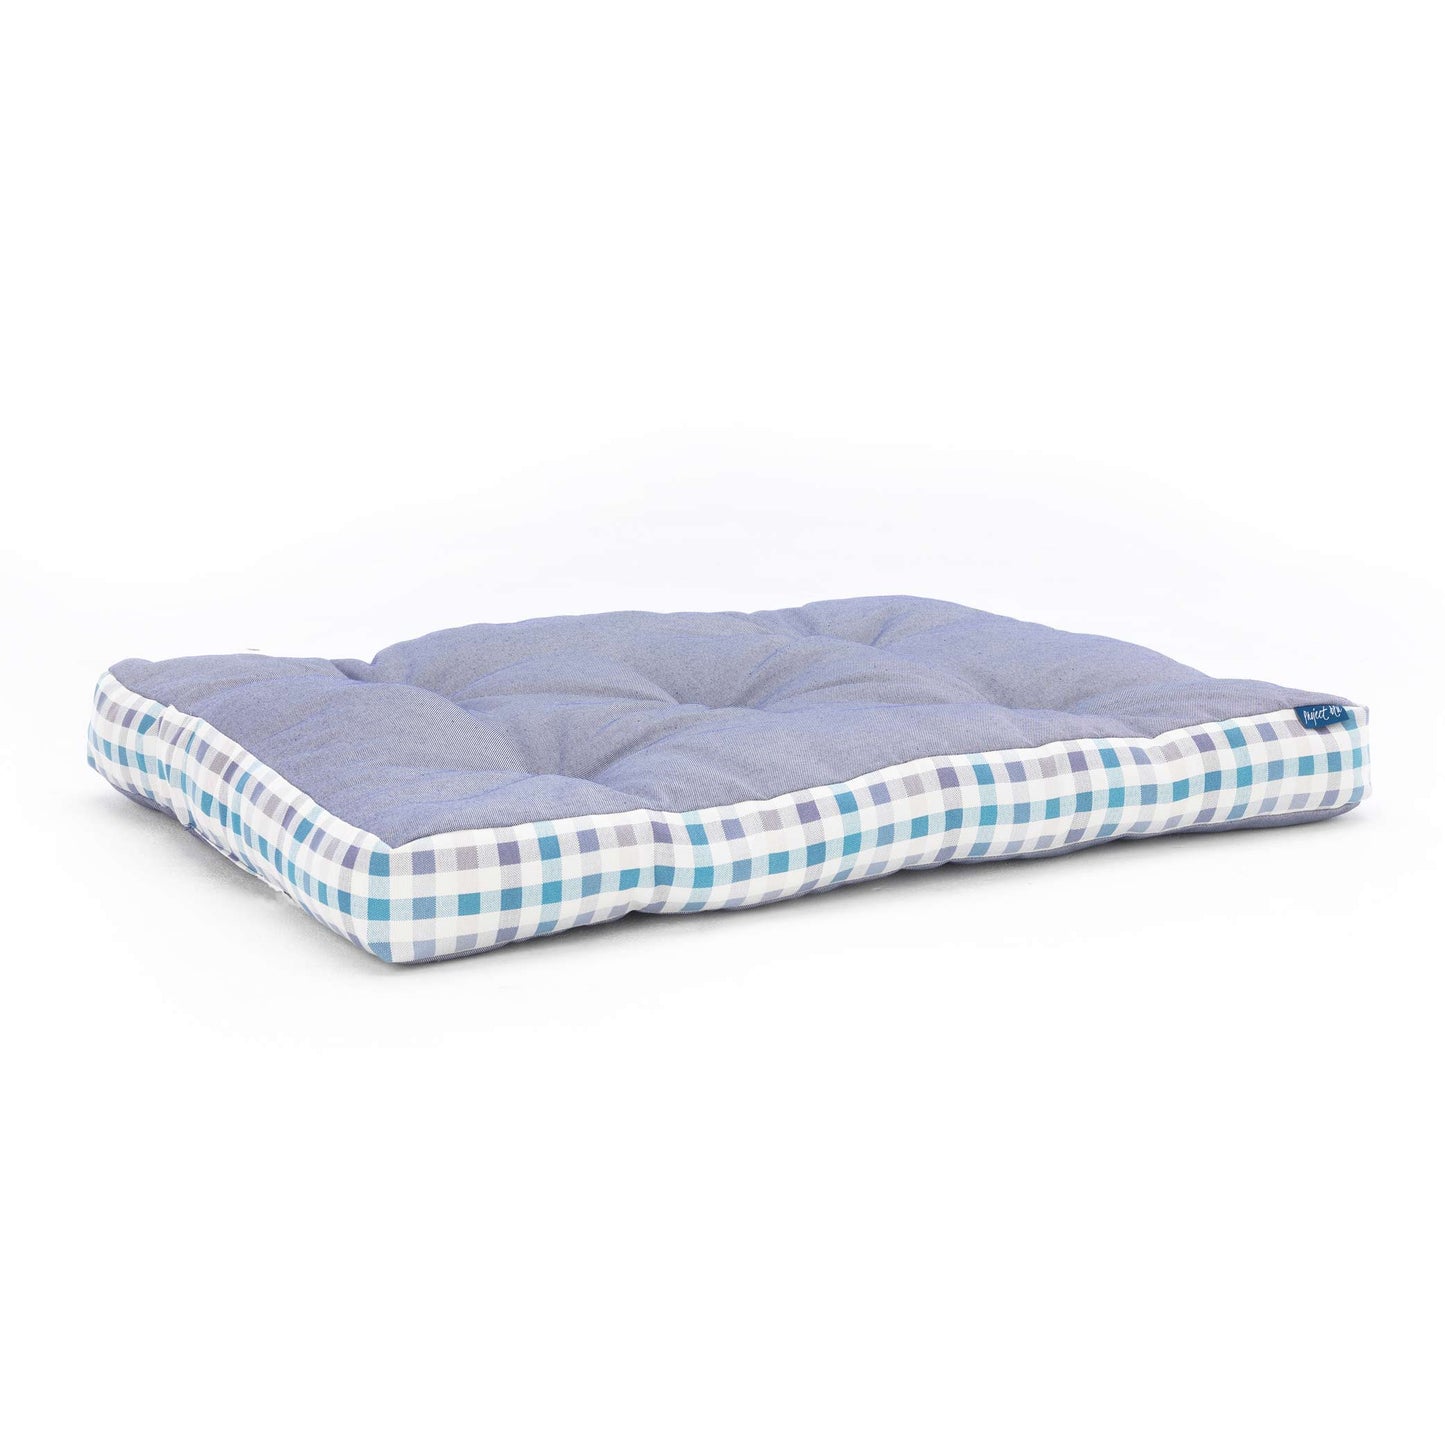 Project Blu Bengal Eco Dog Bed Mattress 